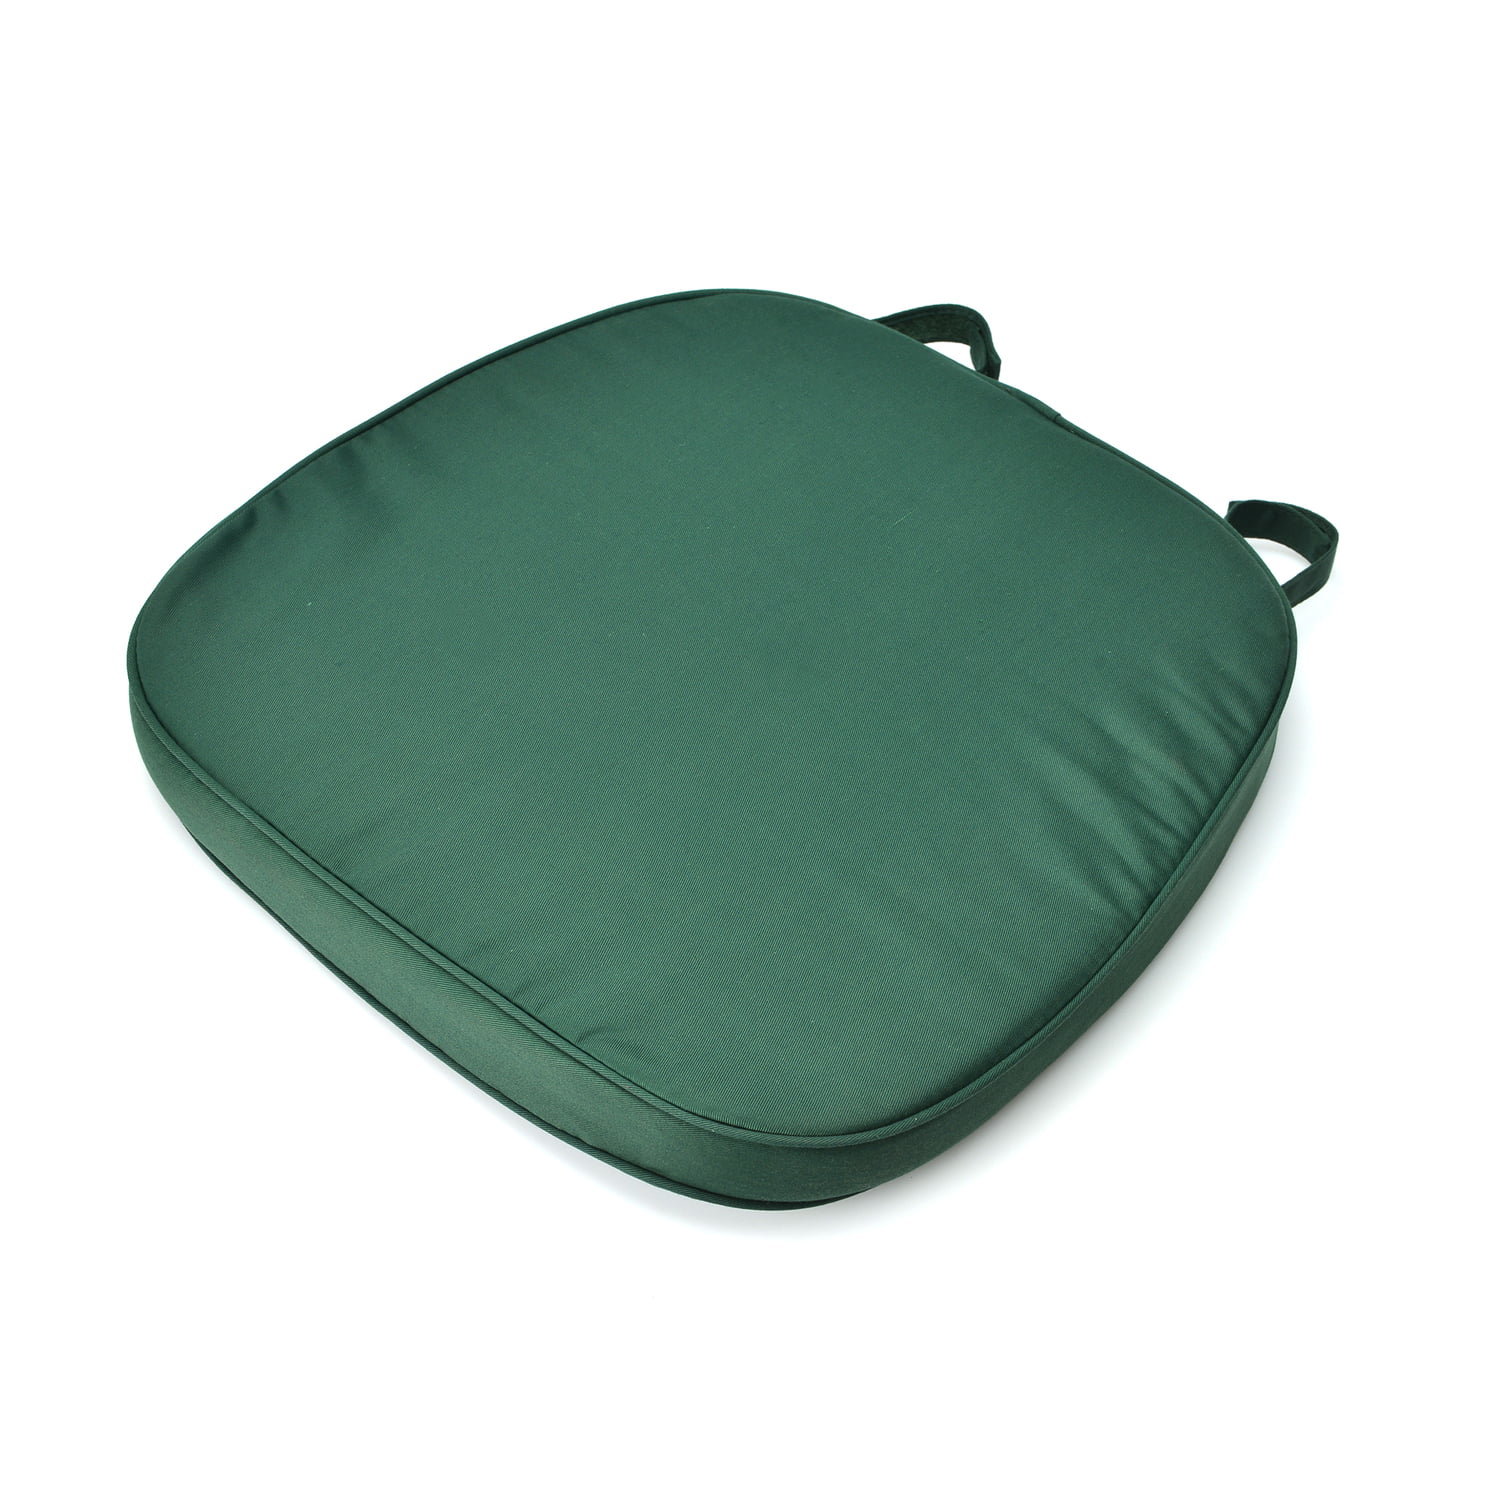 Cu-100-hg-web6 Indoor & Outdoor Hunter Green Cushions, Set Of 6 - 2 X 16 X 16 In.